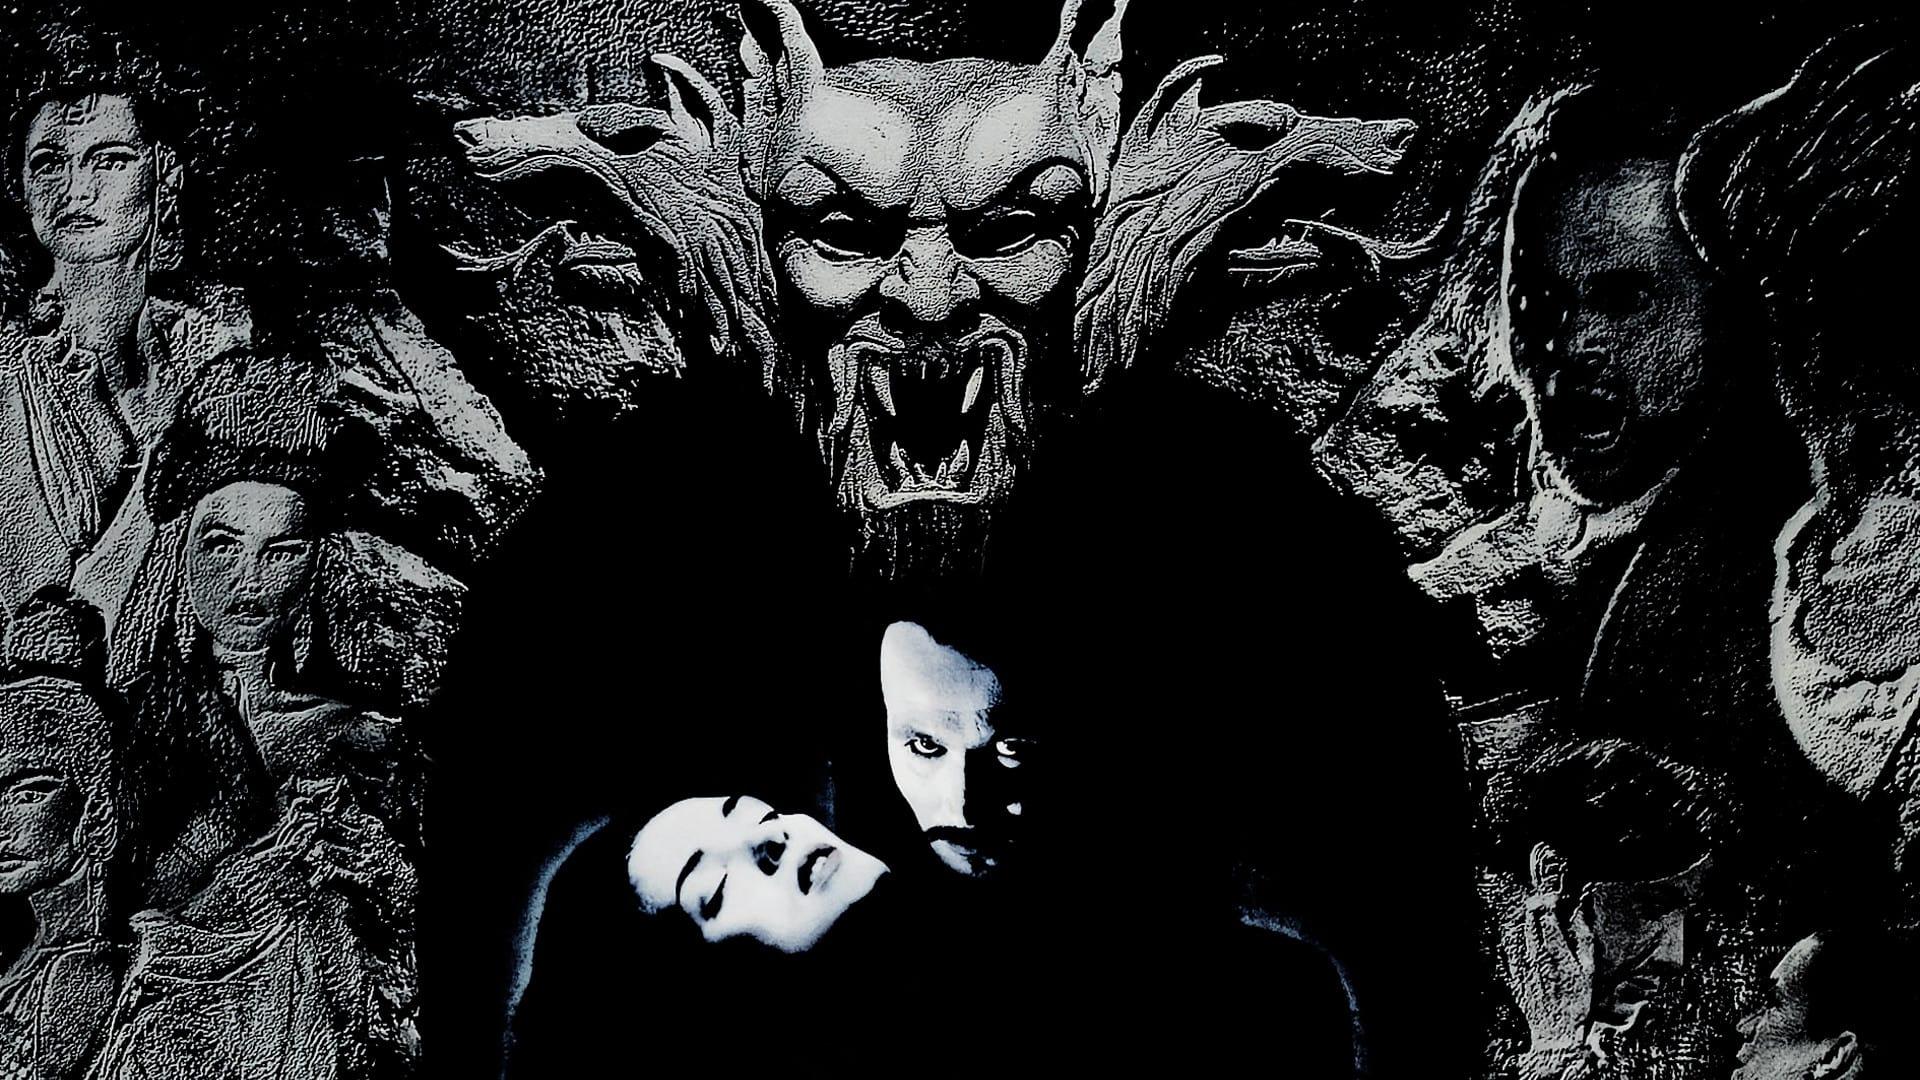 Bram Stoker's Dracula backdrop